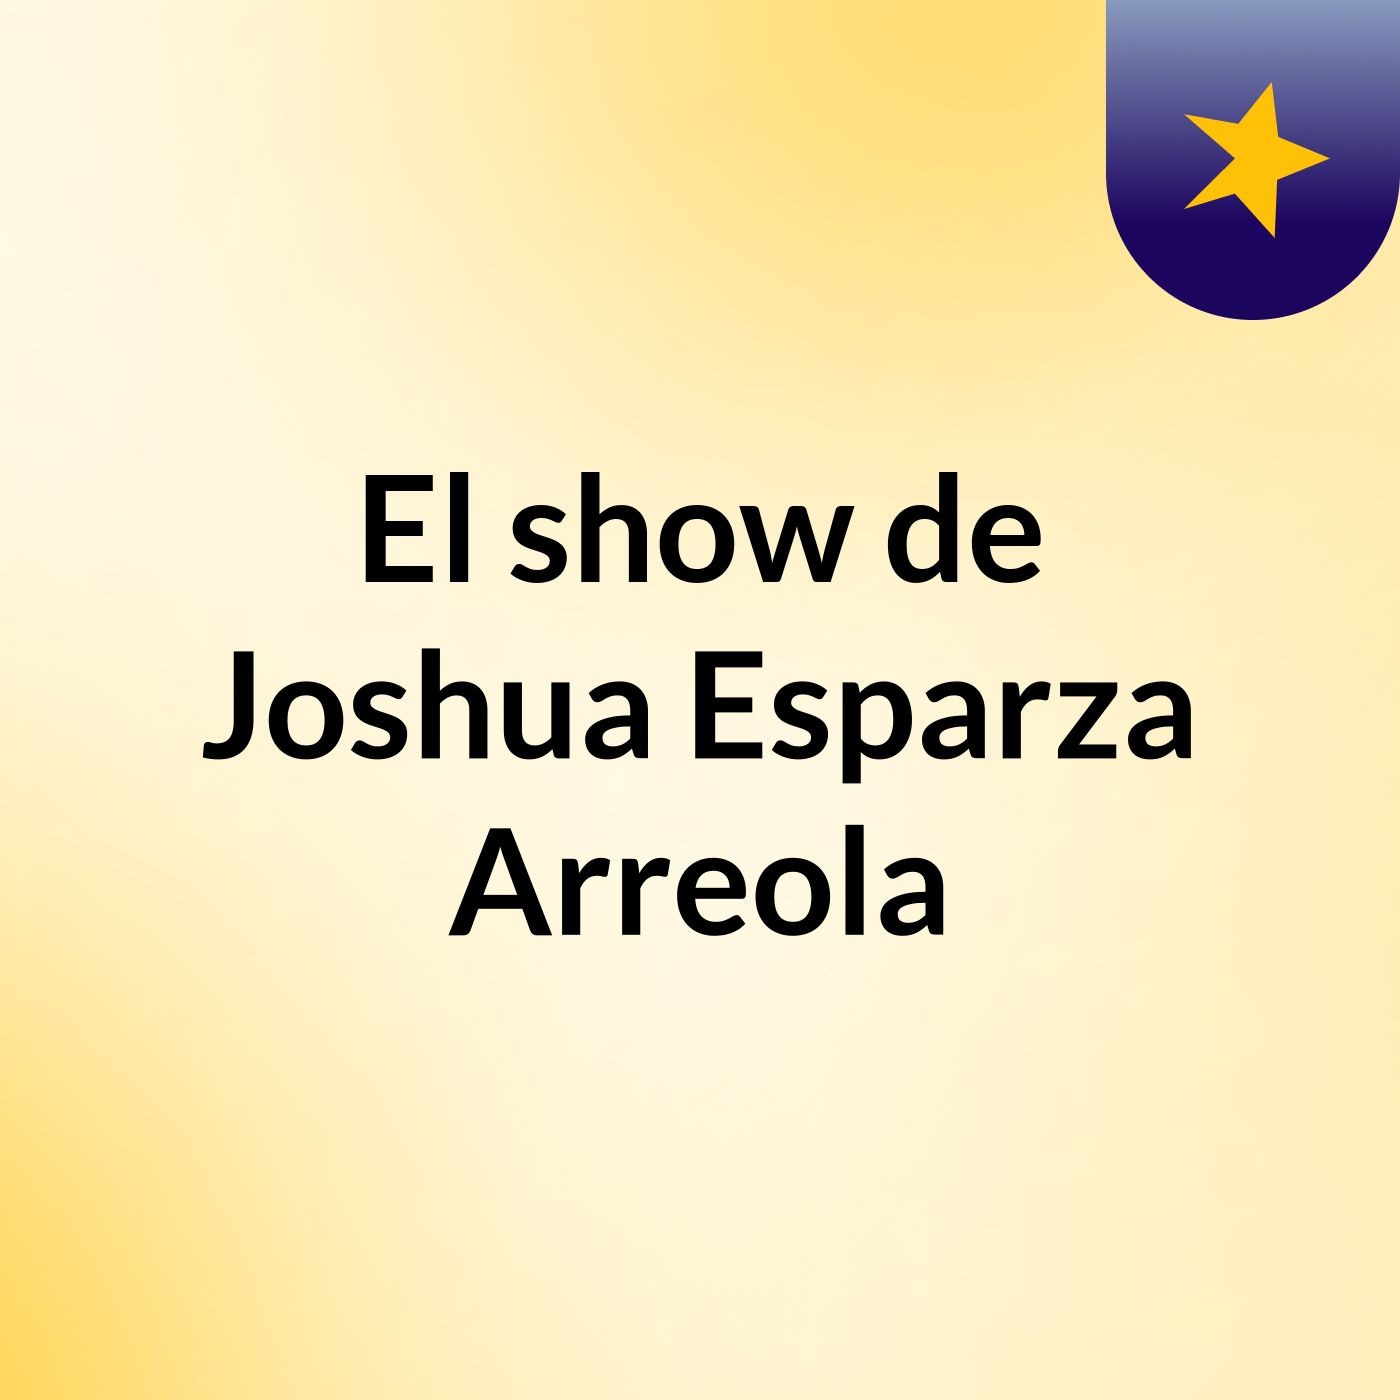 El show de Joshua Esparza Arreola